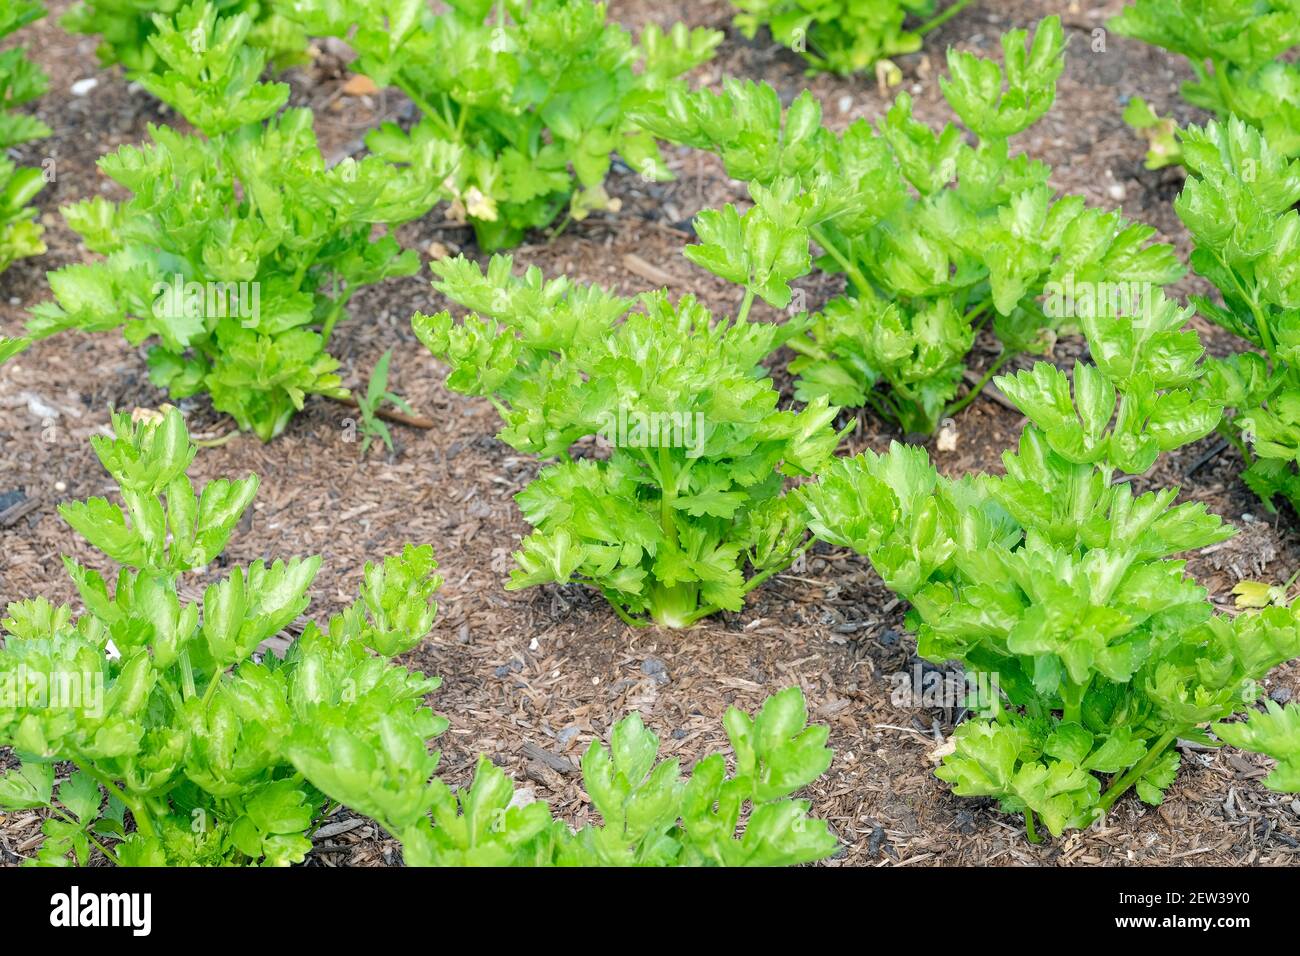 Apium graveolens var. dulce 'Lathom Self Blanching'. Celery 'Lathom Self Blanching'. Rows of young plants growing in a bed Stock Photo